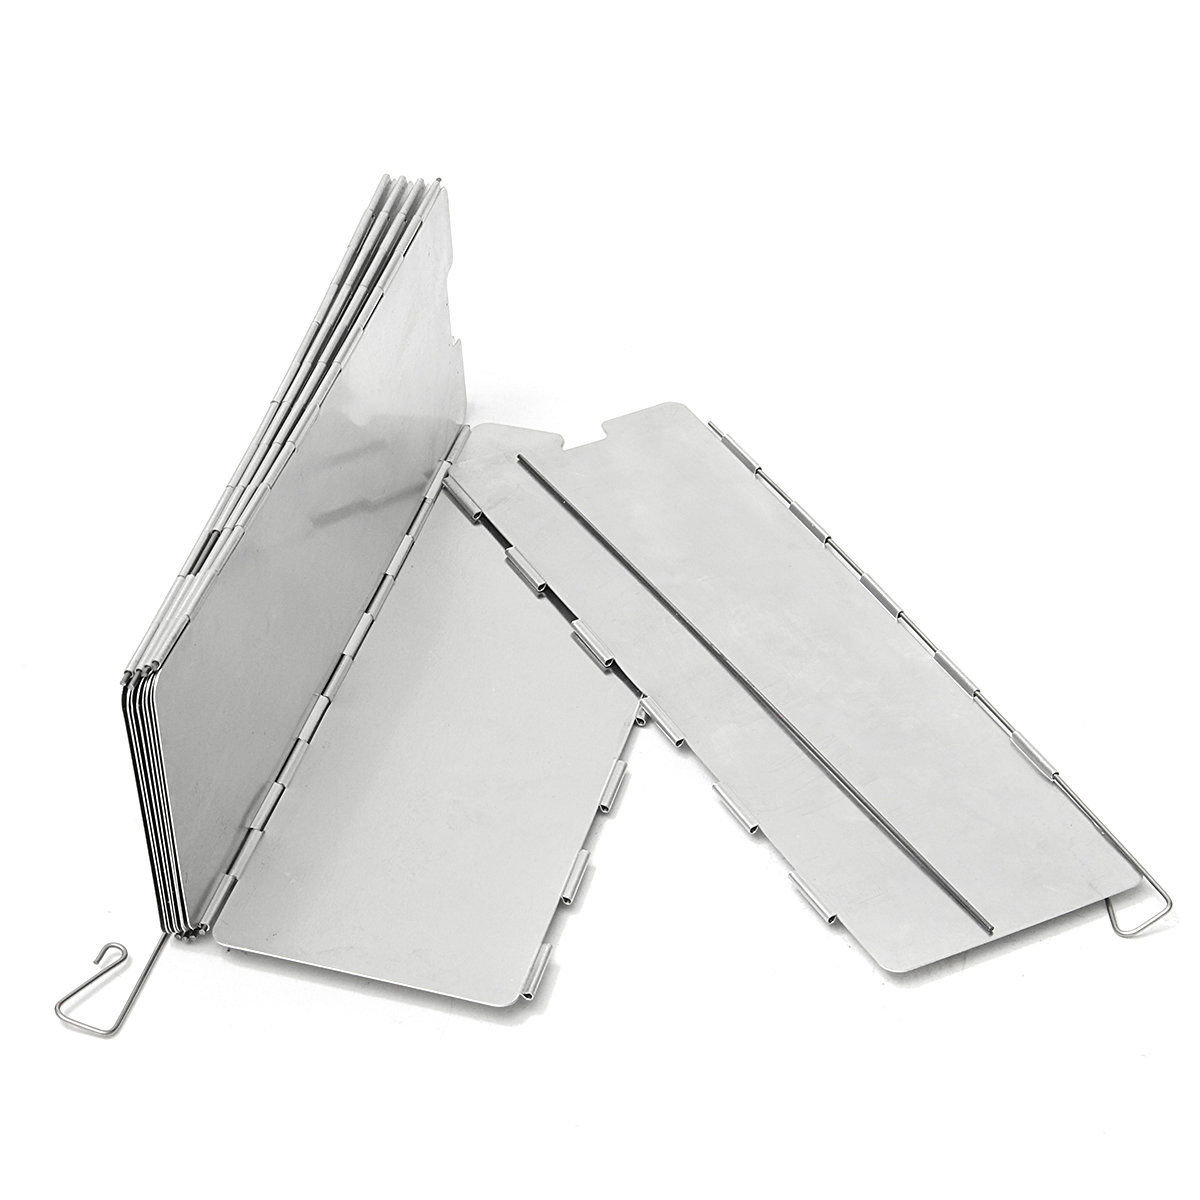 Camping 10 Platen Folding Windschild Picnic BBQ Kook Gasfornuis Aluminium Board Screen 